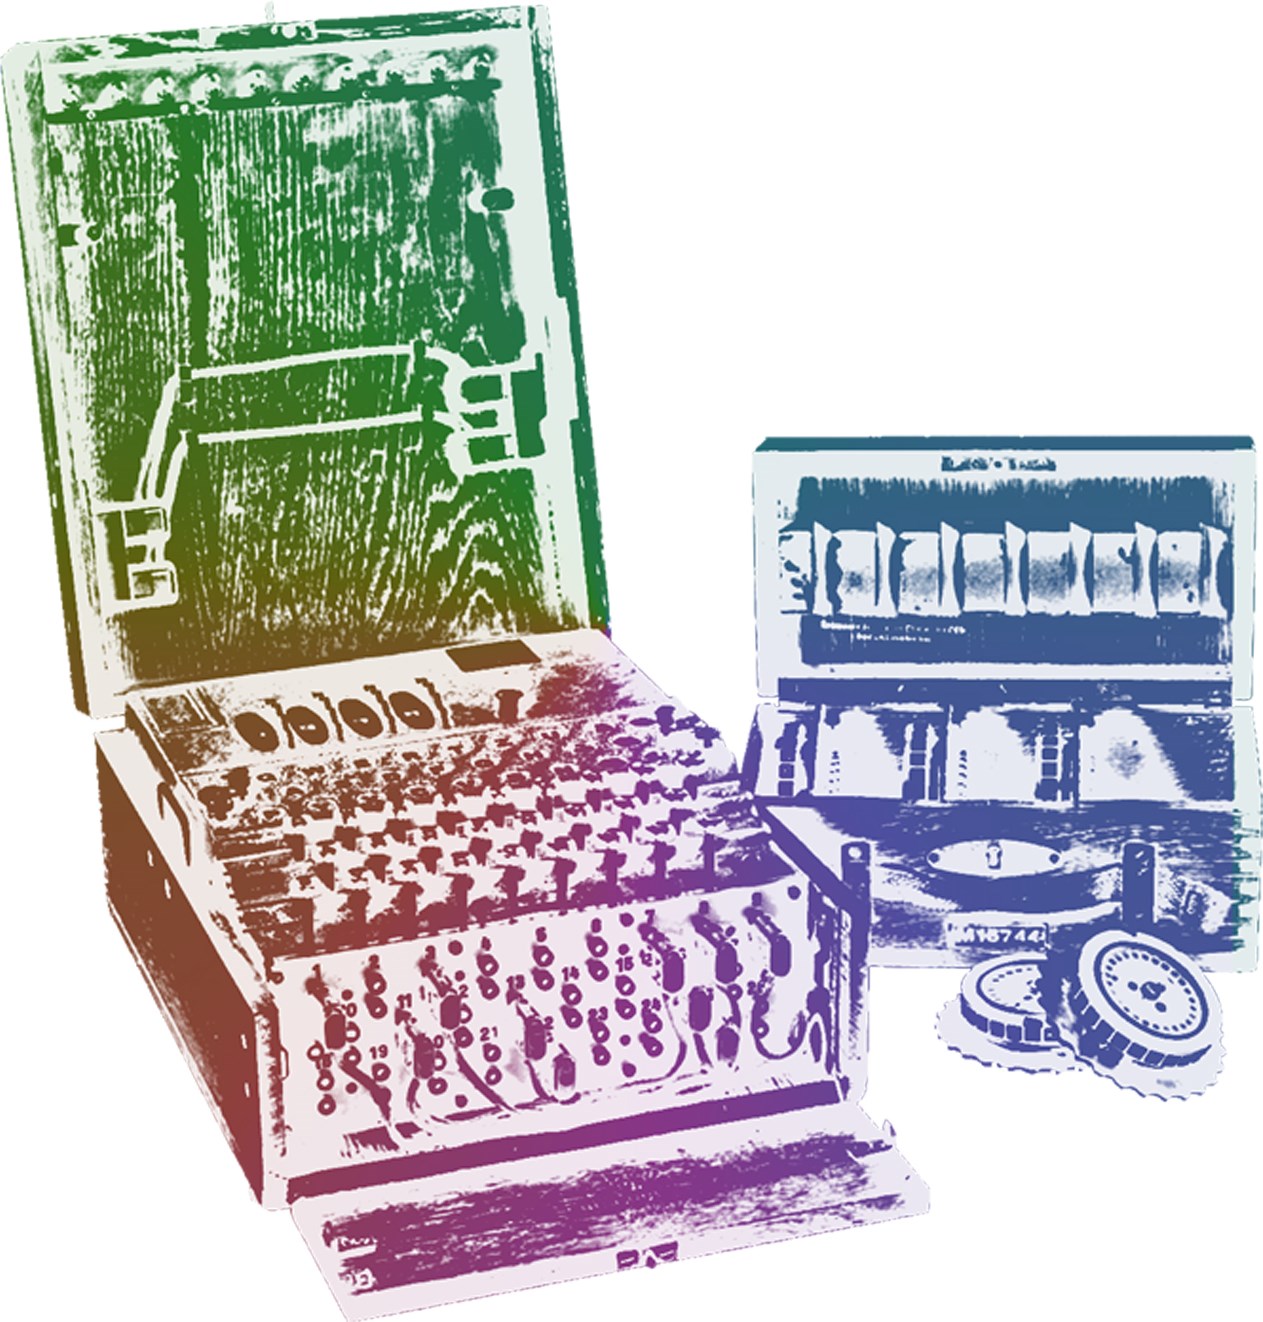 Multicoloured interpretation of the Enigma encoding macine